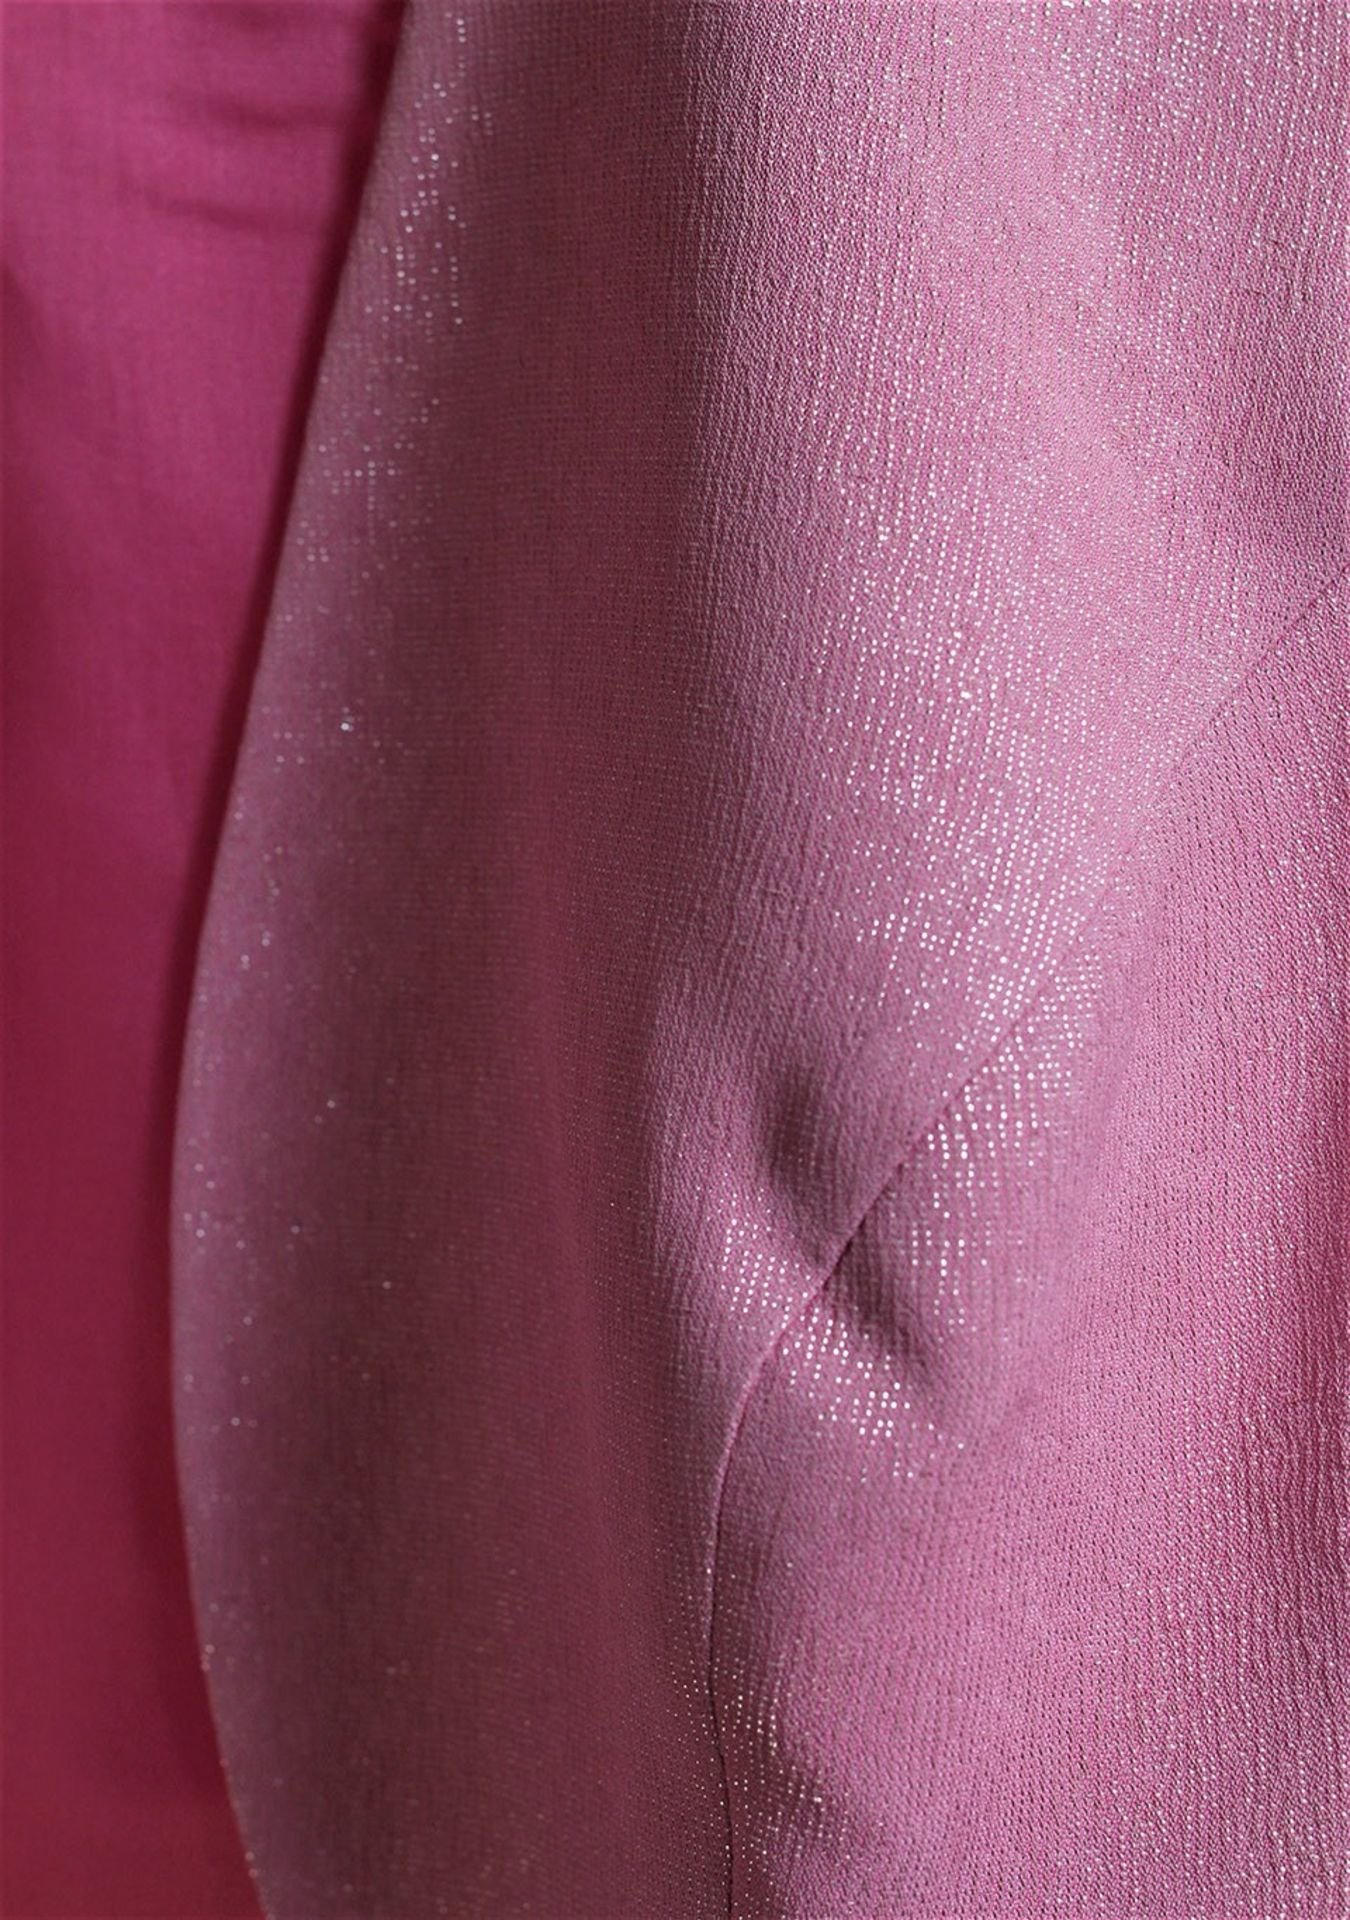 1 x Boutique Le Duc Pink Waistcoat - Size: L - Material: 49% Cotton, 40% Acetate, 11% Poly metal - Image 7 of 7